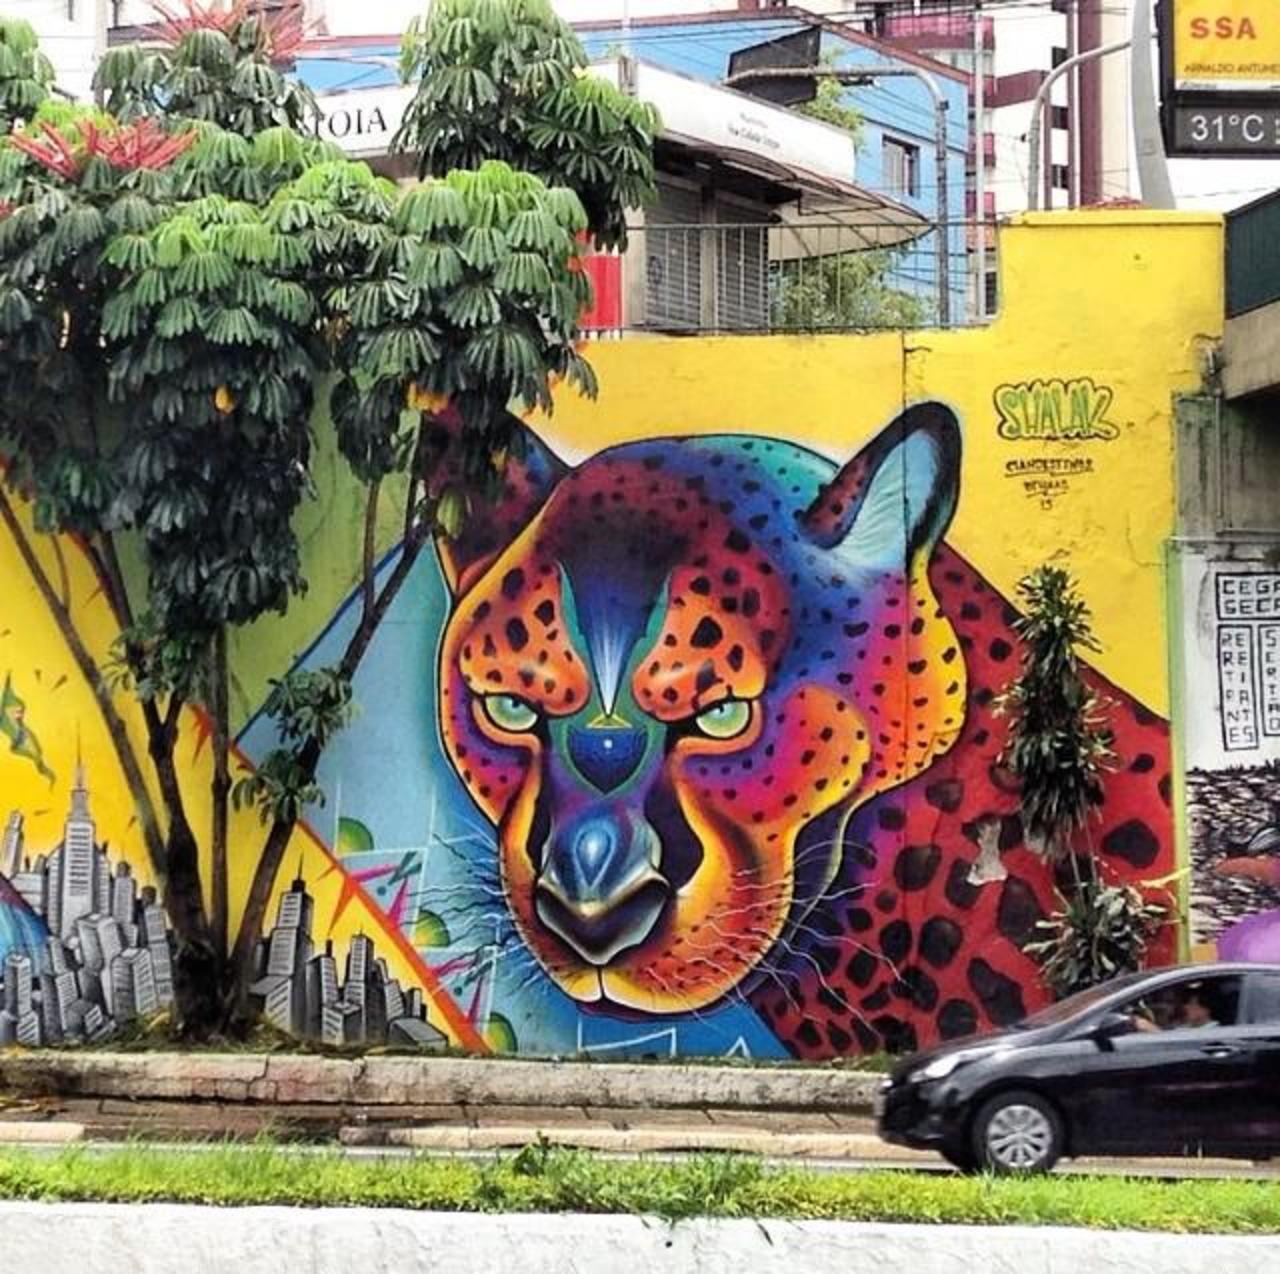 Artist ShalakAttack beautiful & colourful nature in Street Art piece in São Paulo 

#art #graffiti #mural #streetart http://t.co/uFqPB30n35